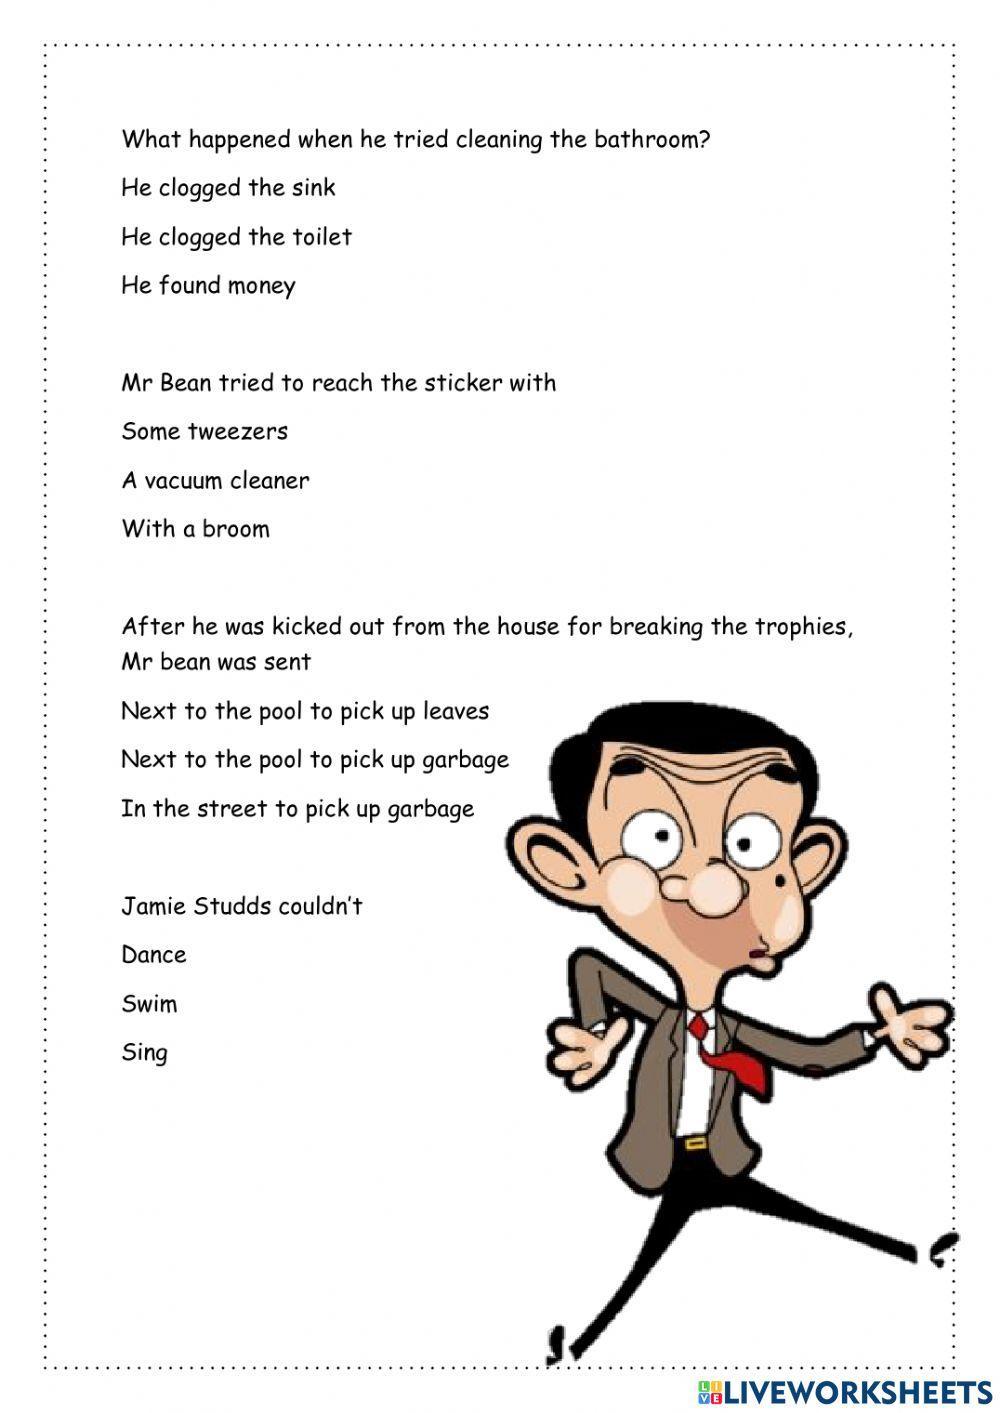 Mr.Bean Video Comprehension